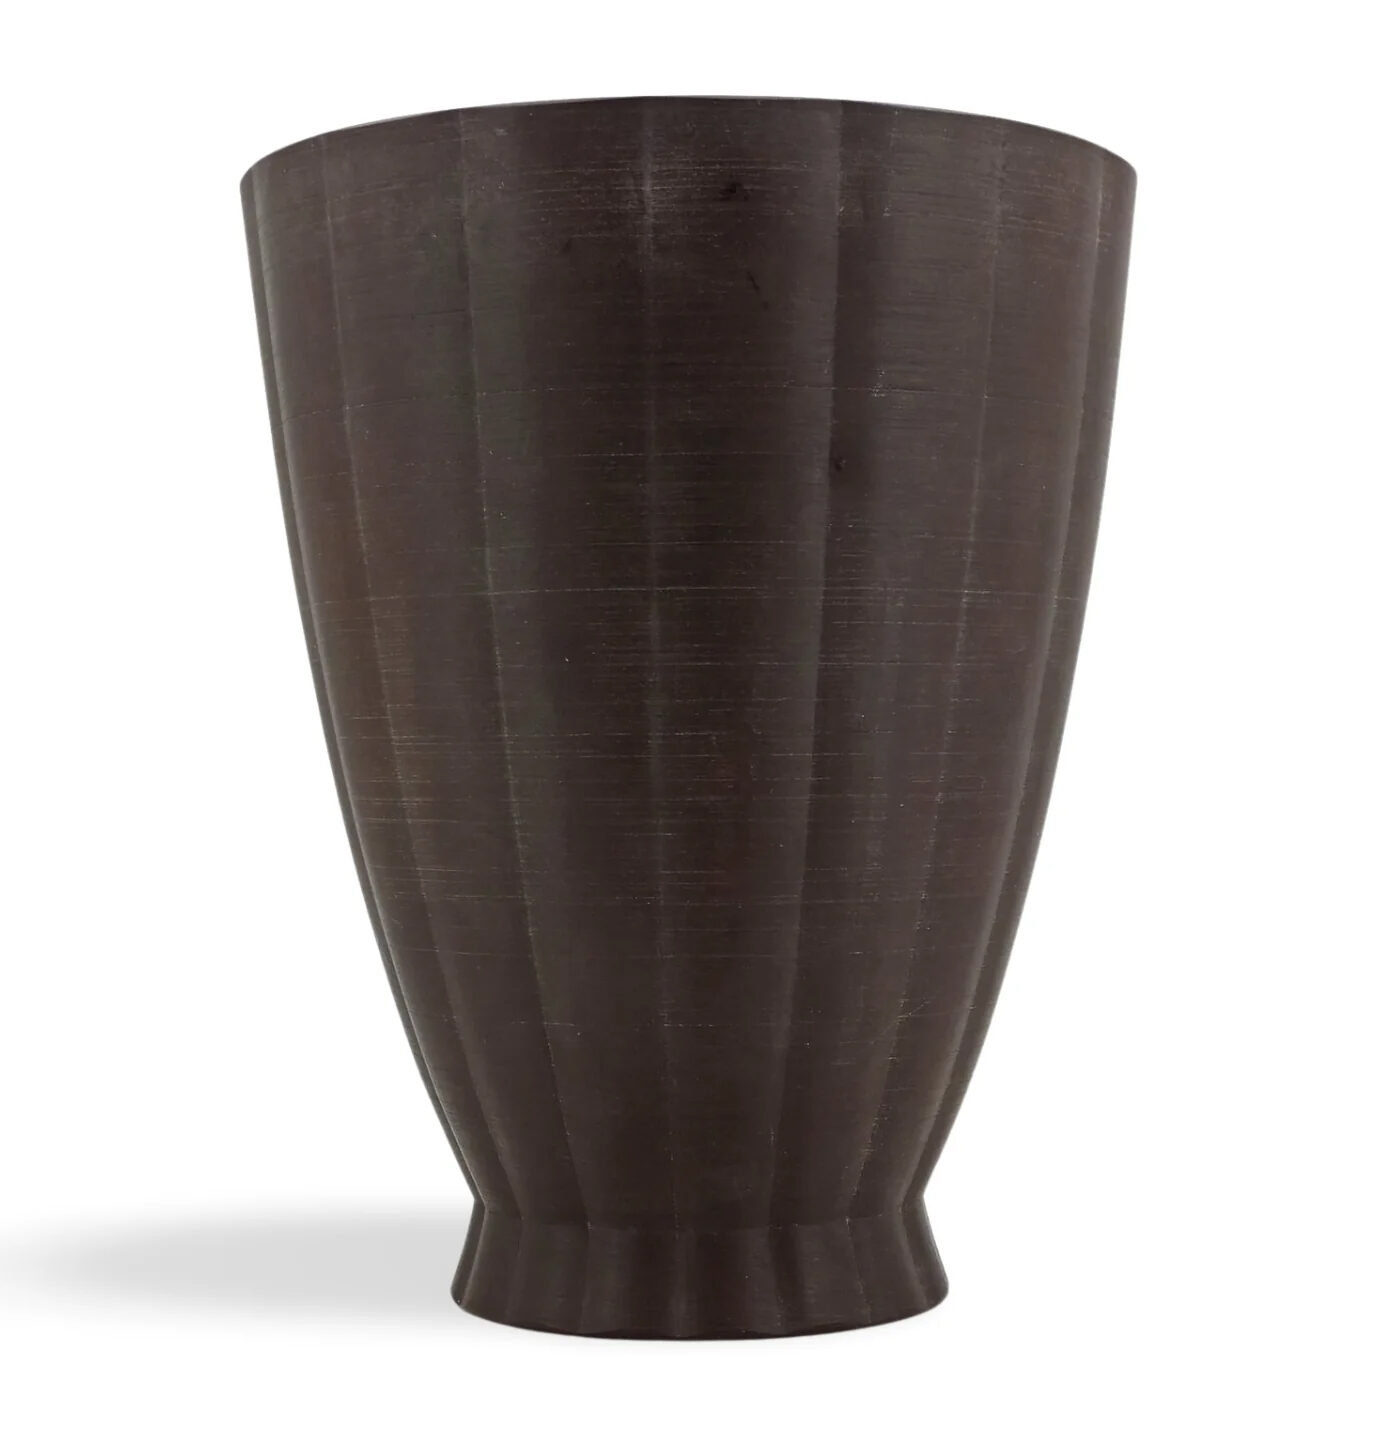 Wedgwood c. 1930 Keith Murray bronze basalt vase $3,000 READ MORE